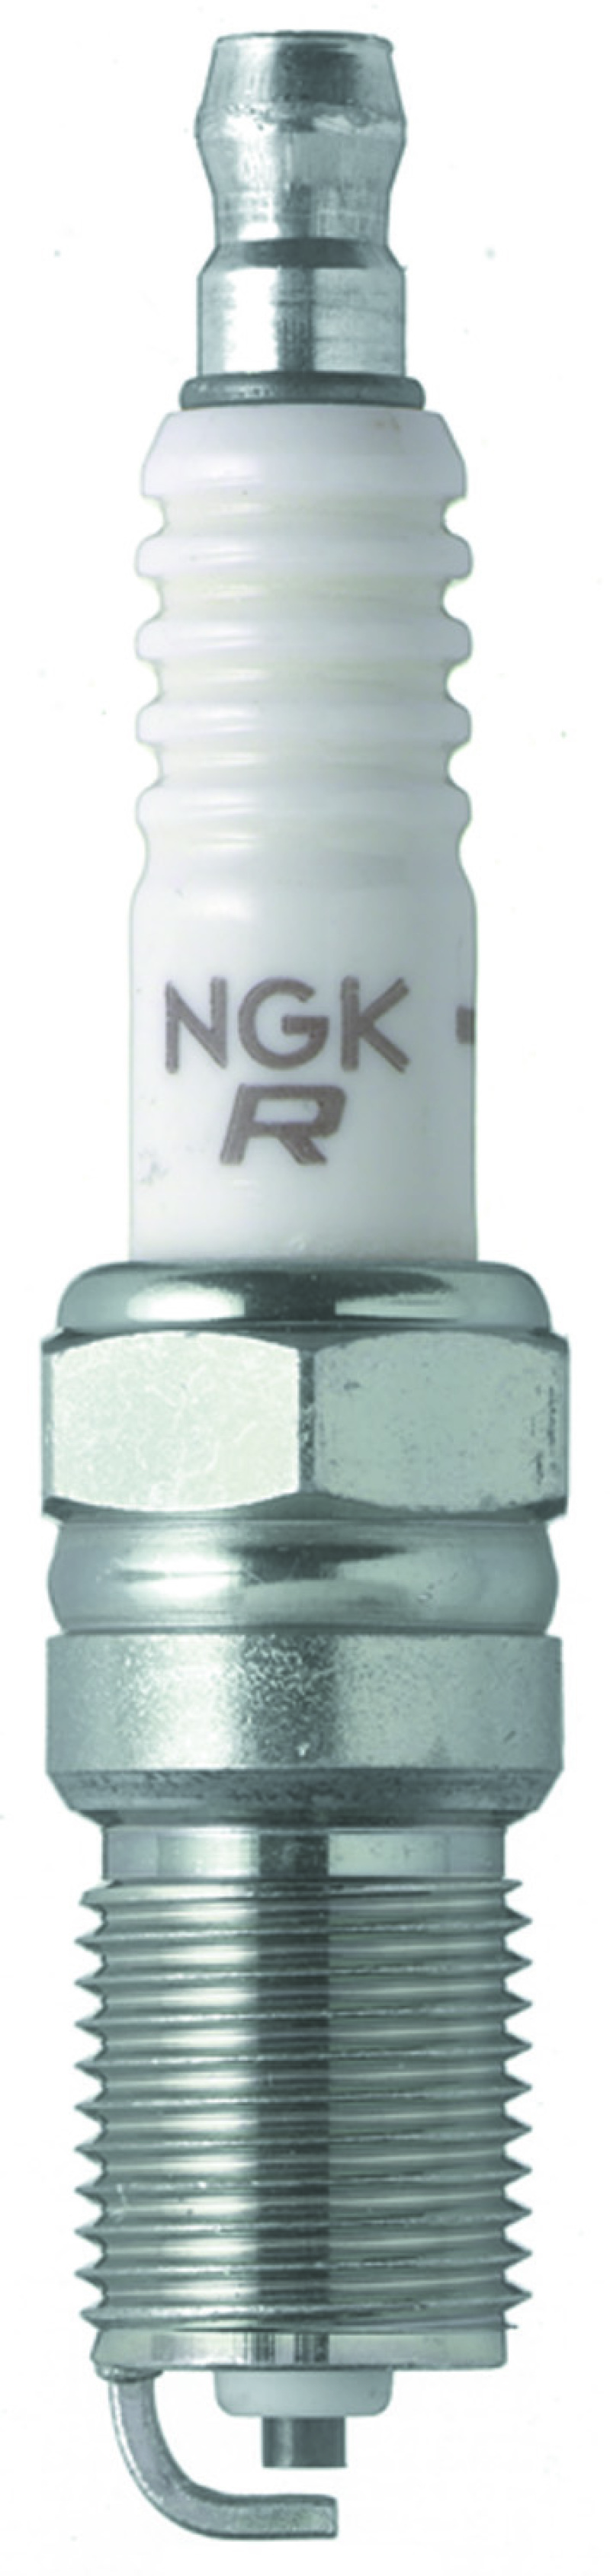 NGK Copper Core Spark Plug Box of 10 (BPR6EFS) - 3623